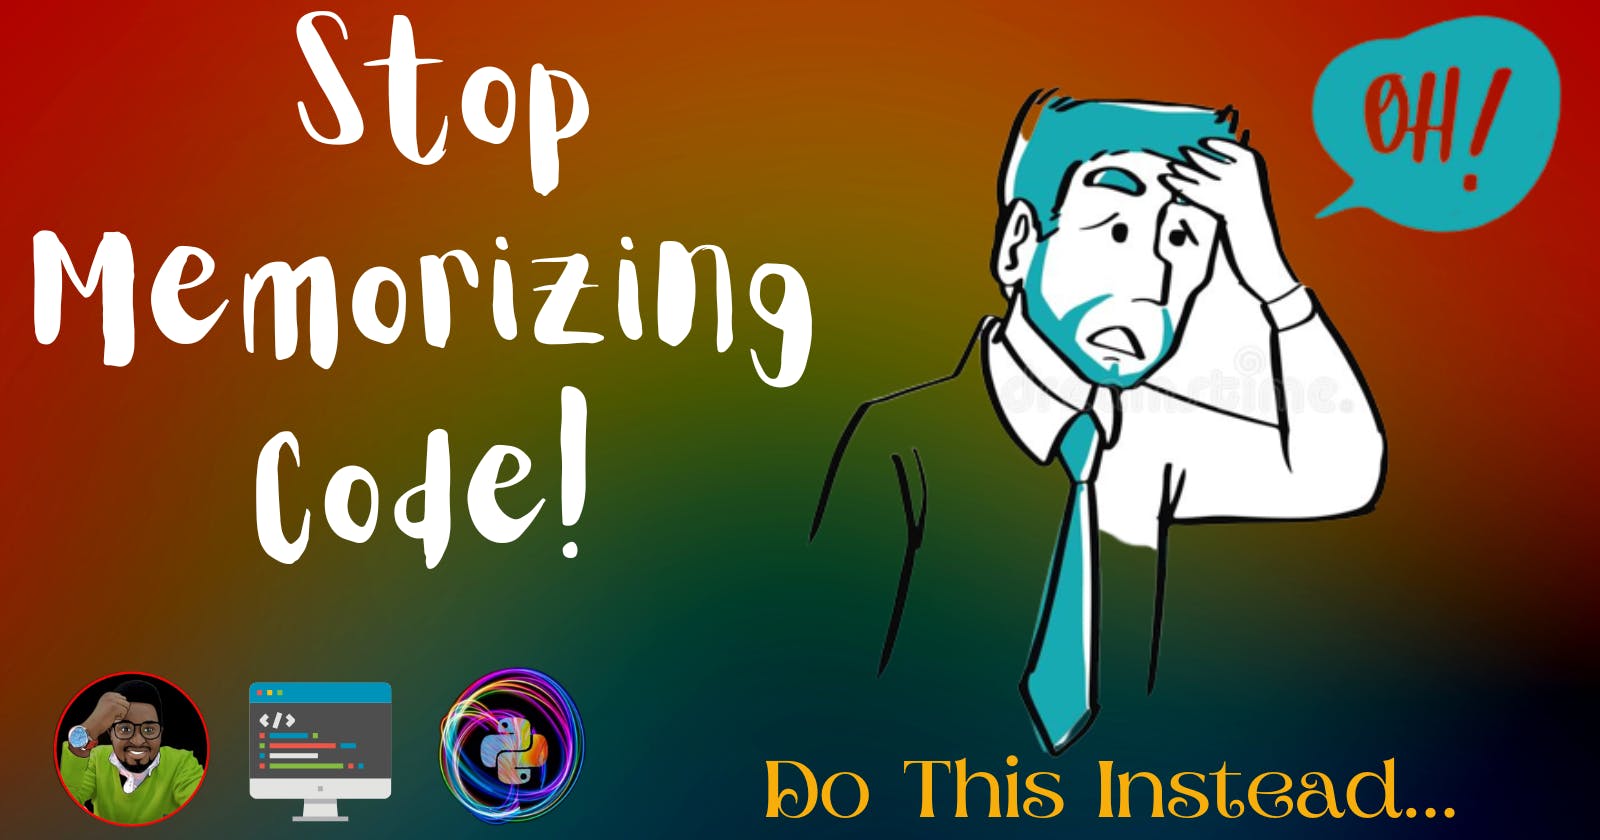 Stop Memorizing Code! Do This Instead...